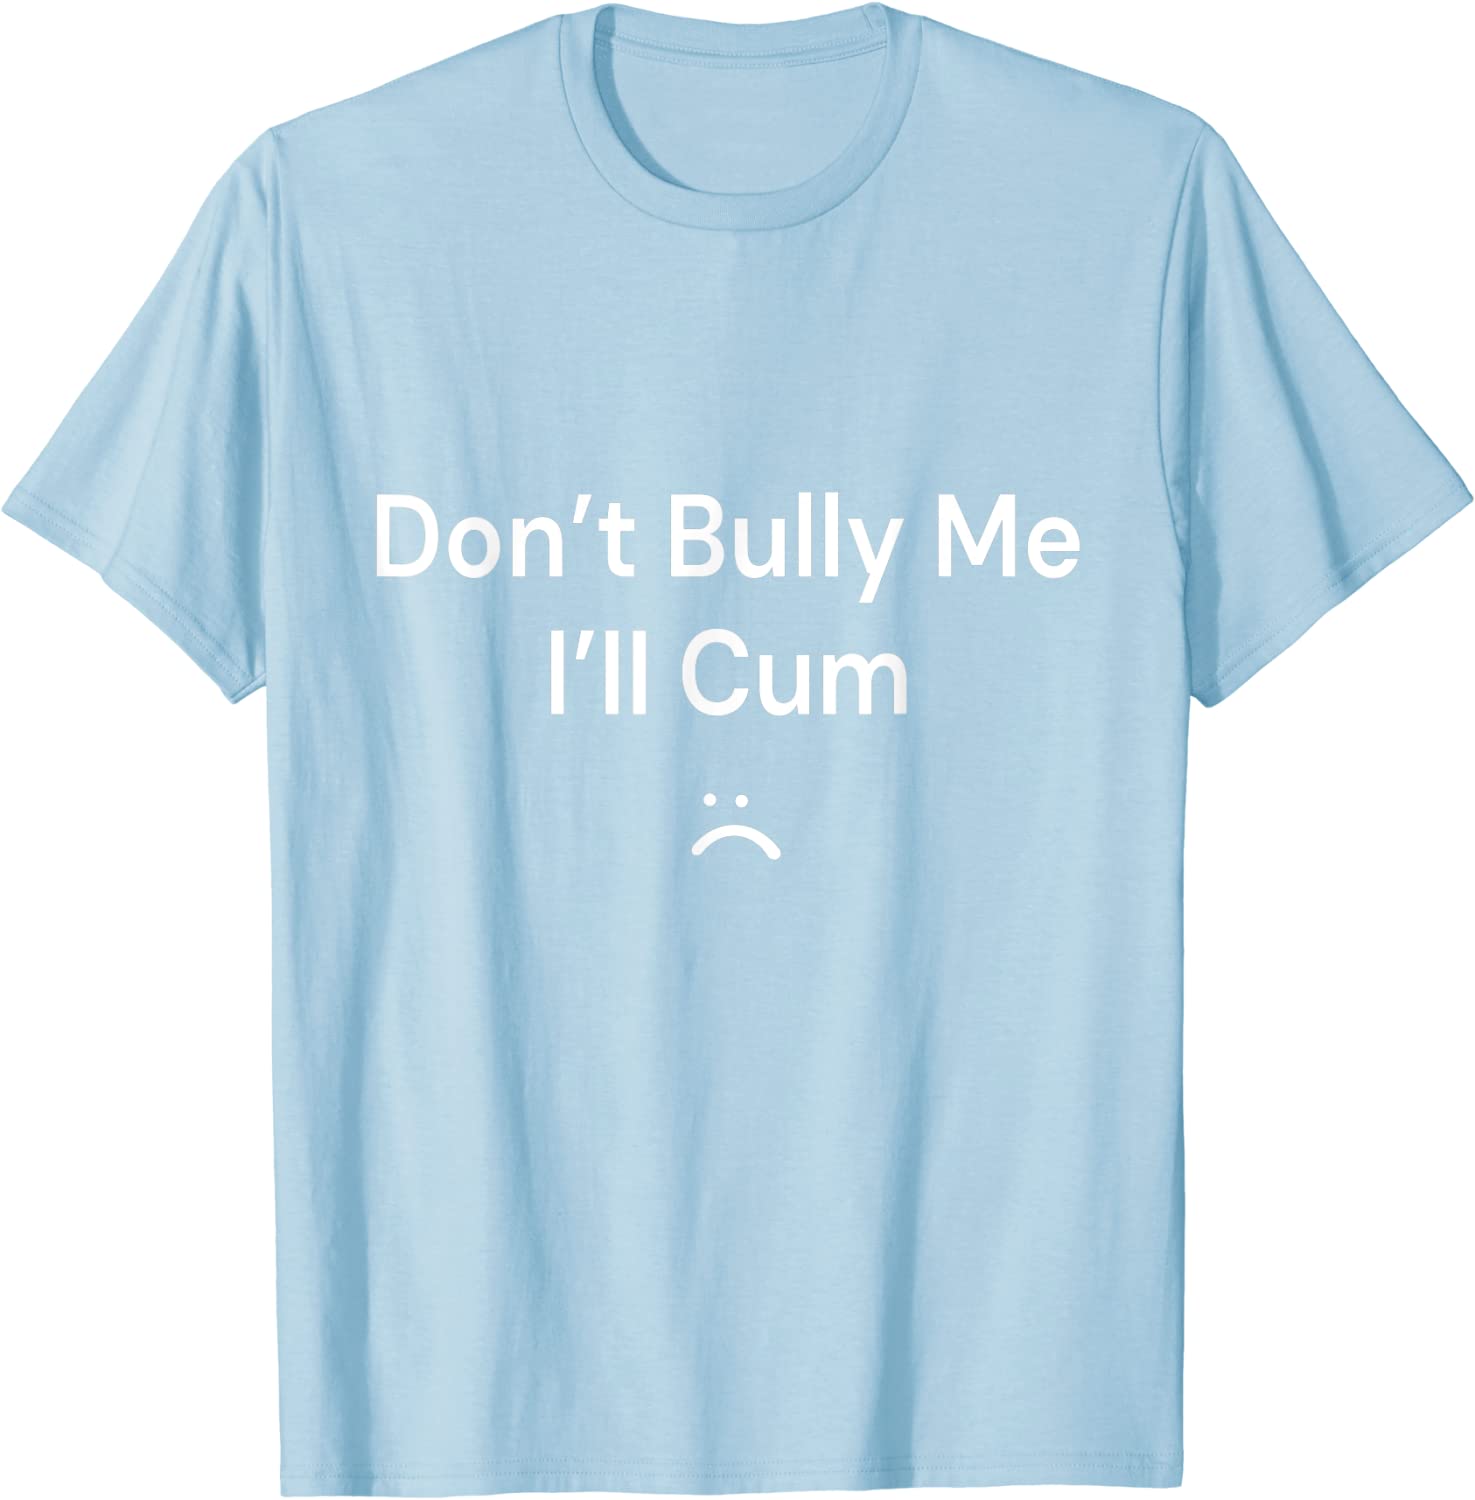 Don't Bully Me I'll Cum (19)